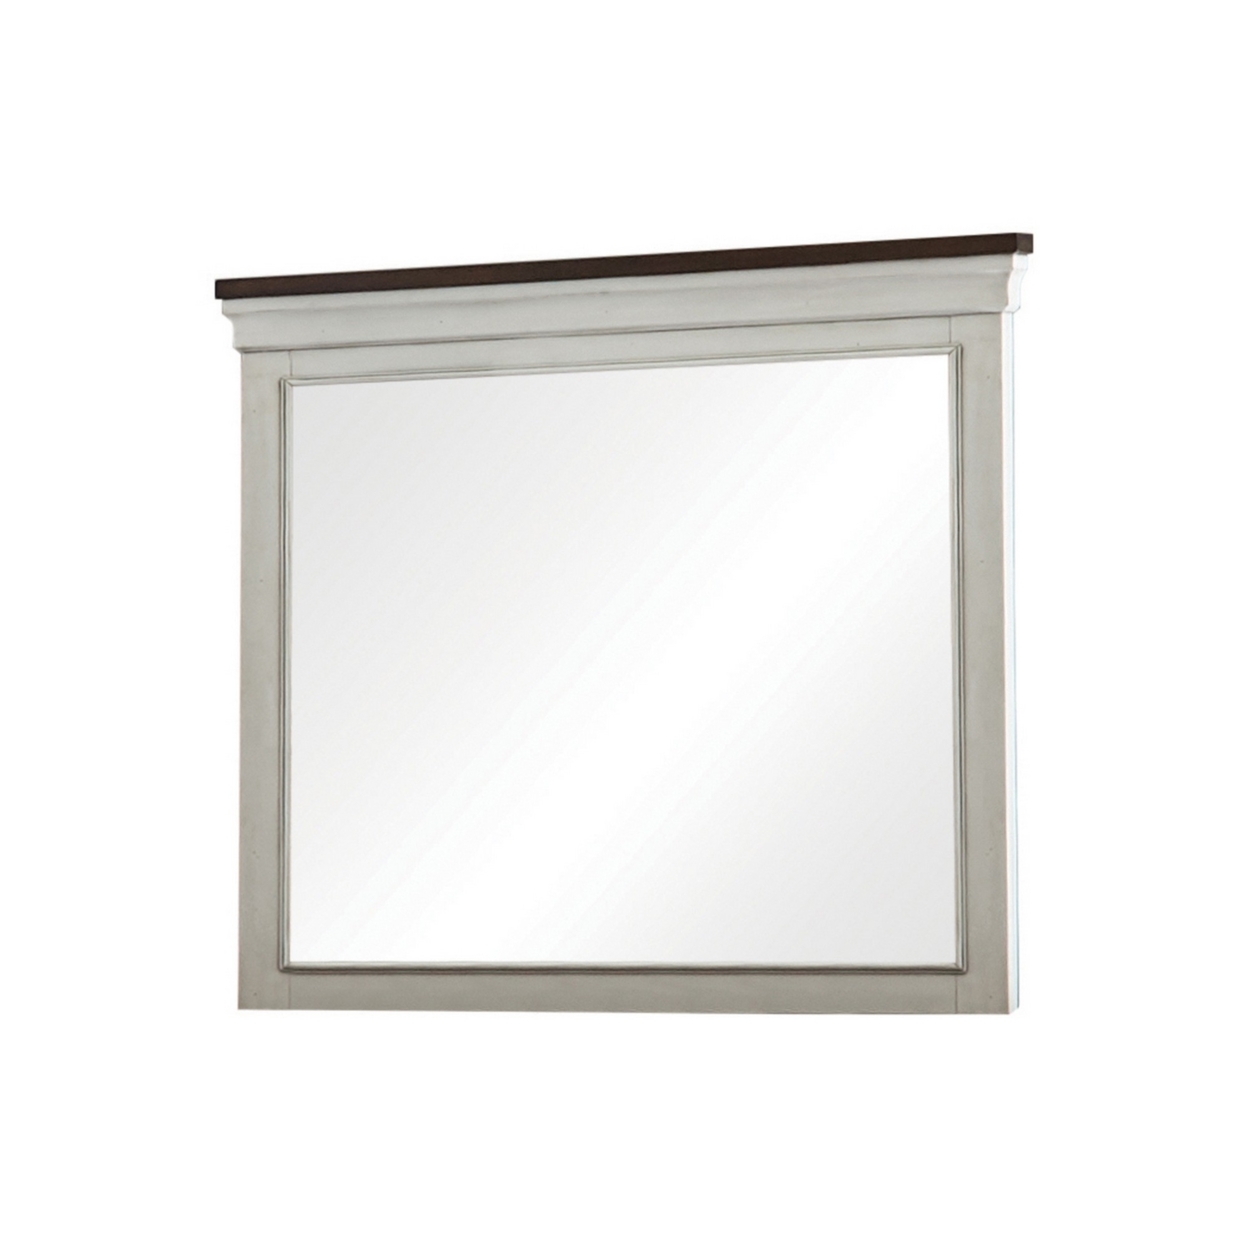 Ivy 42 Inch Modern Rectangular Mirror With Wood Frame, Brown, White